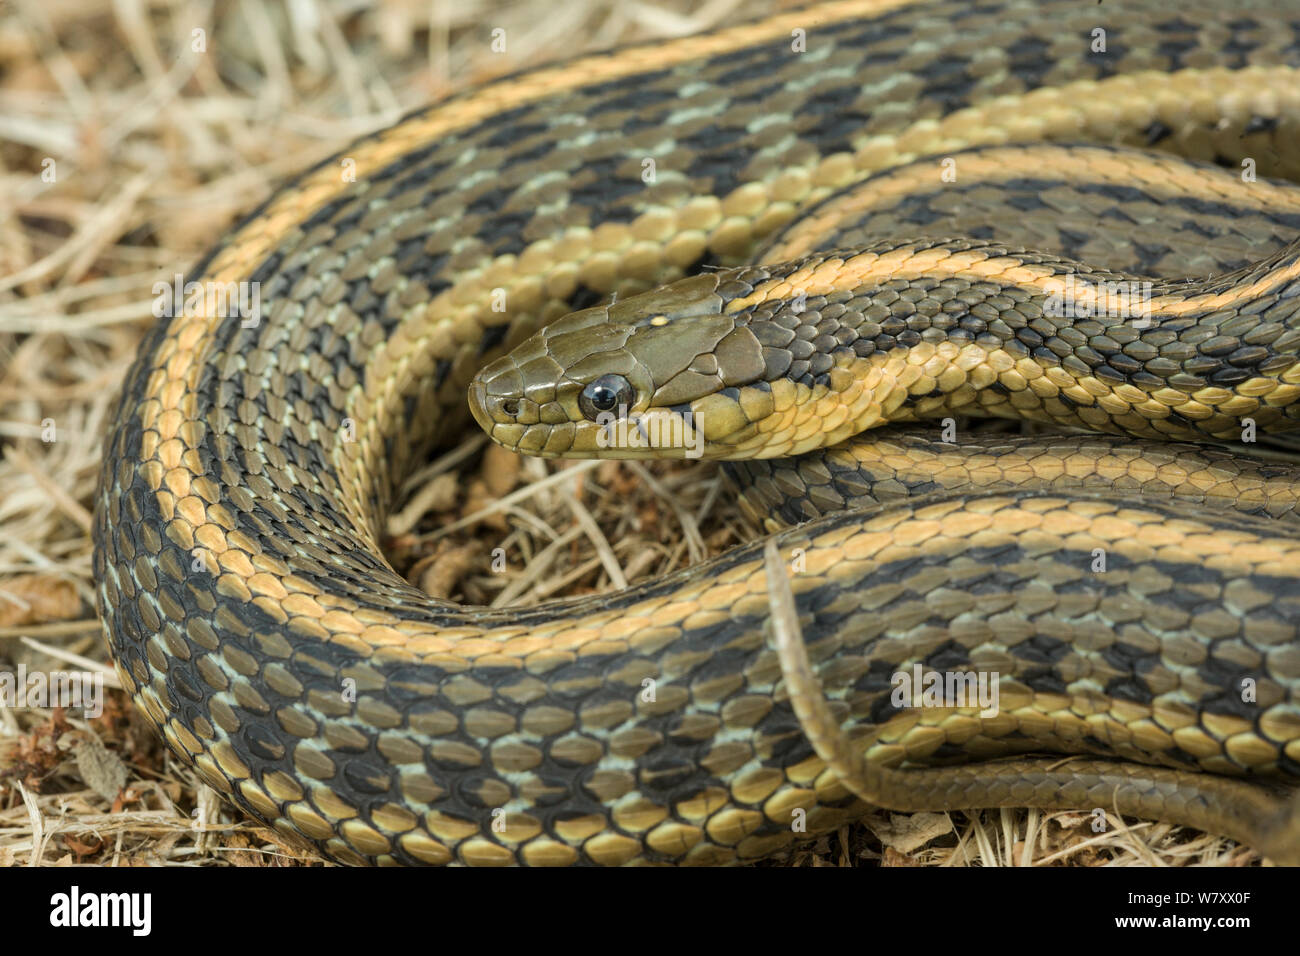 Pacific Coast Aquatic Garter Snake (Thamnophis atratus atratus) Point Reyes, California, USA, April. Stock Photo